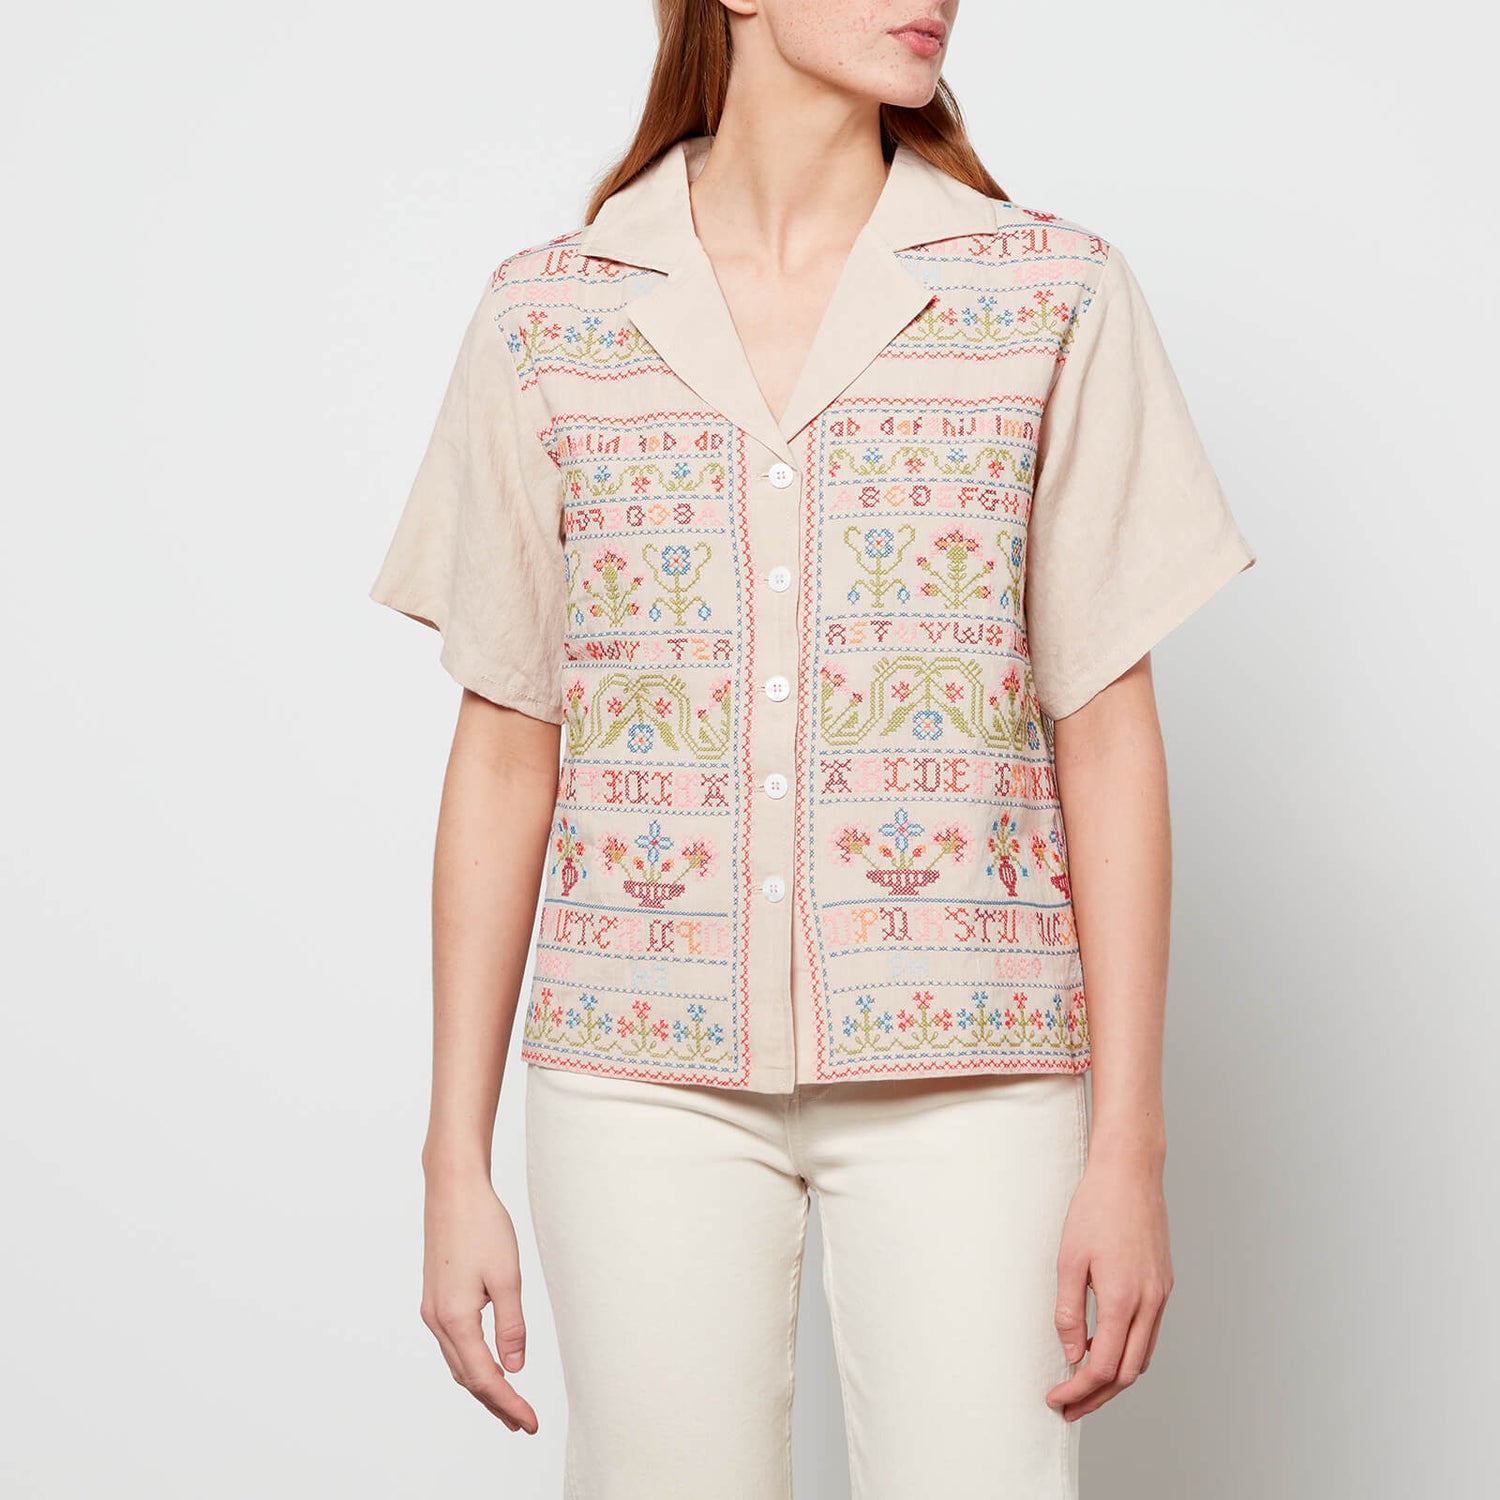 Meadows Women's Sampler Shirt - Sampler Embroidery - UK 8